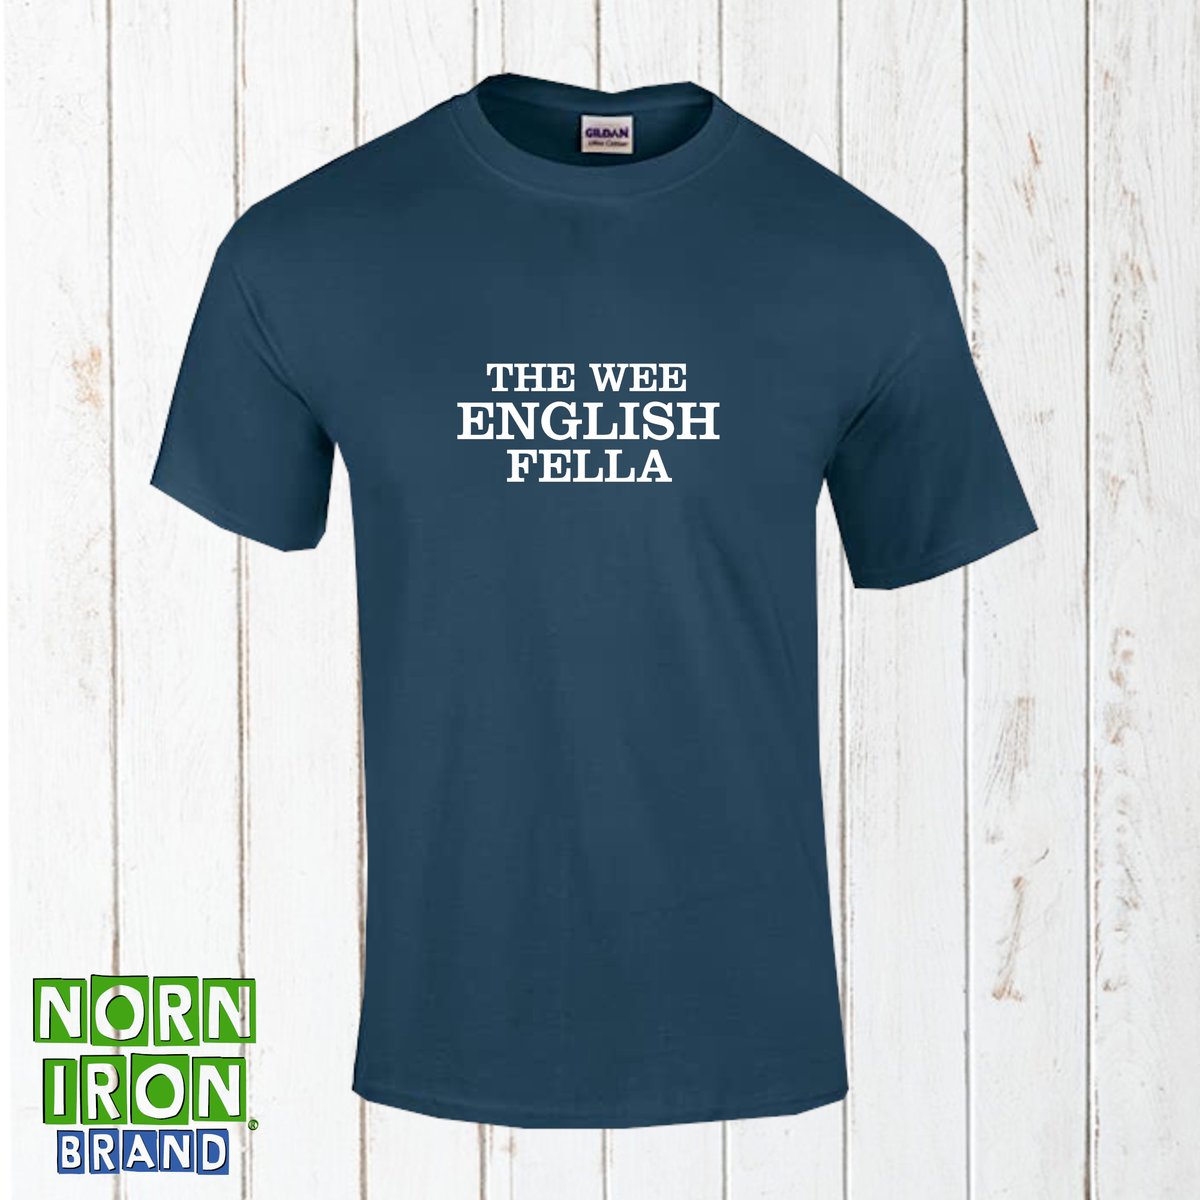 The Wee English Fella T-Shirt